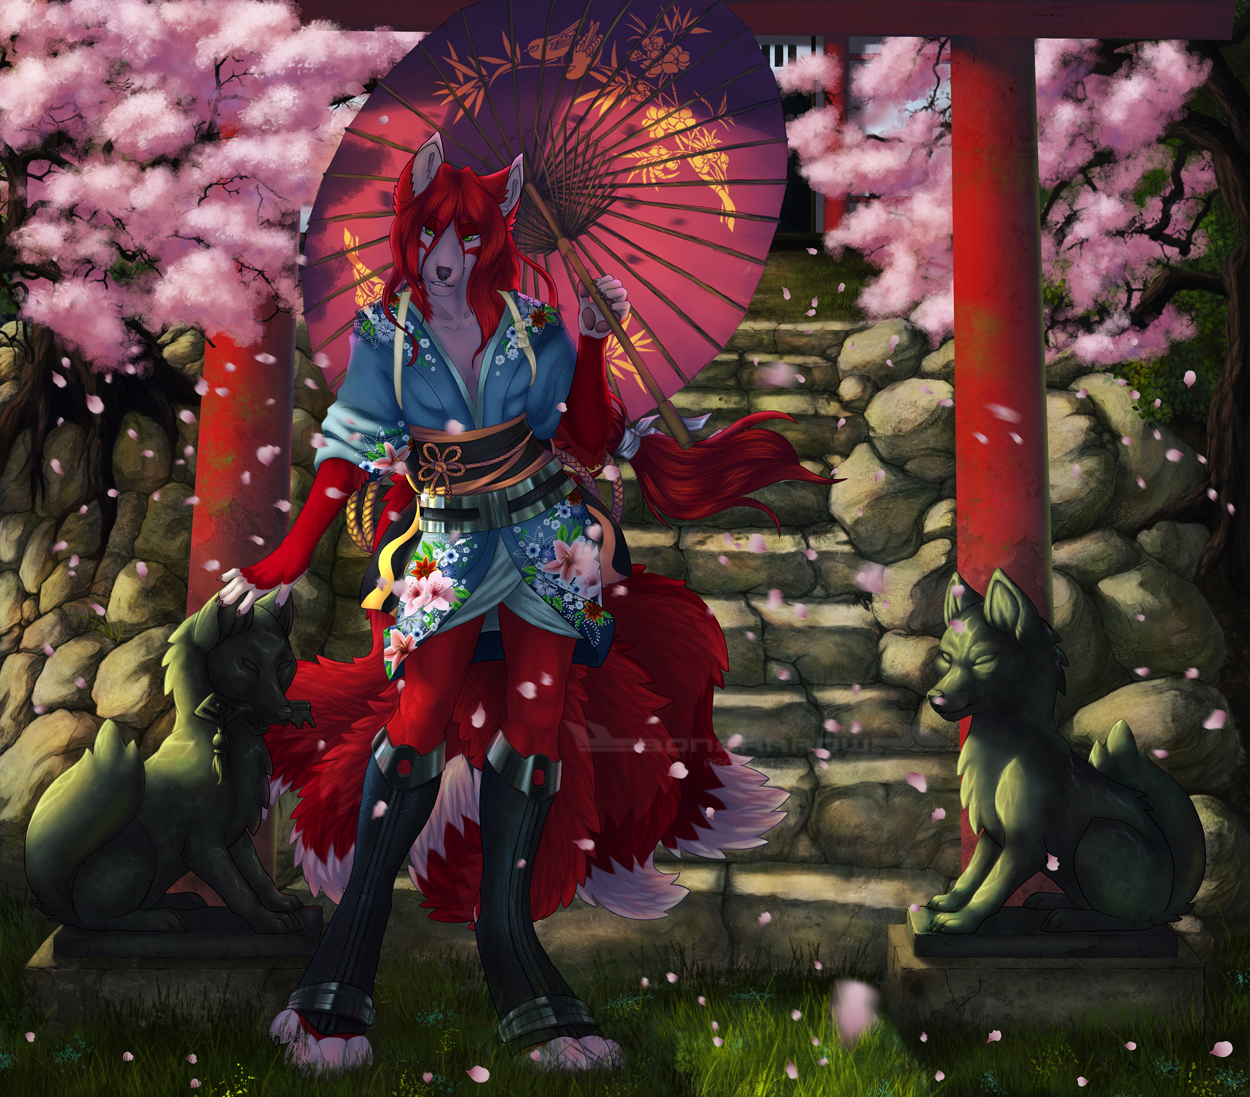 Kitsune and the shrine